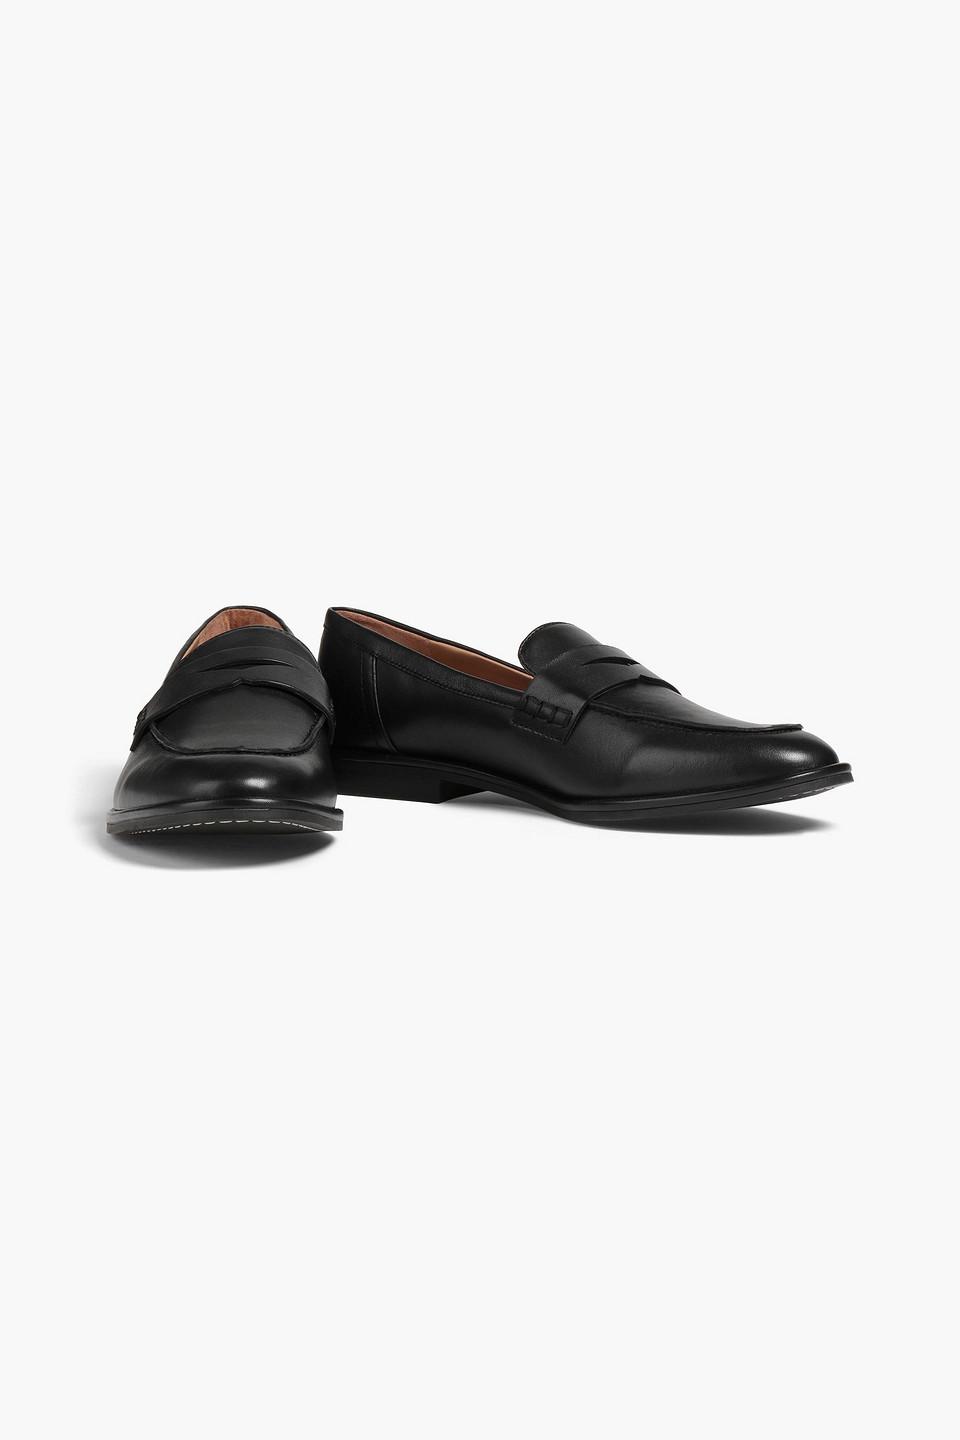 Sam Edelman Birch Leather Loafers in Black | Lyst